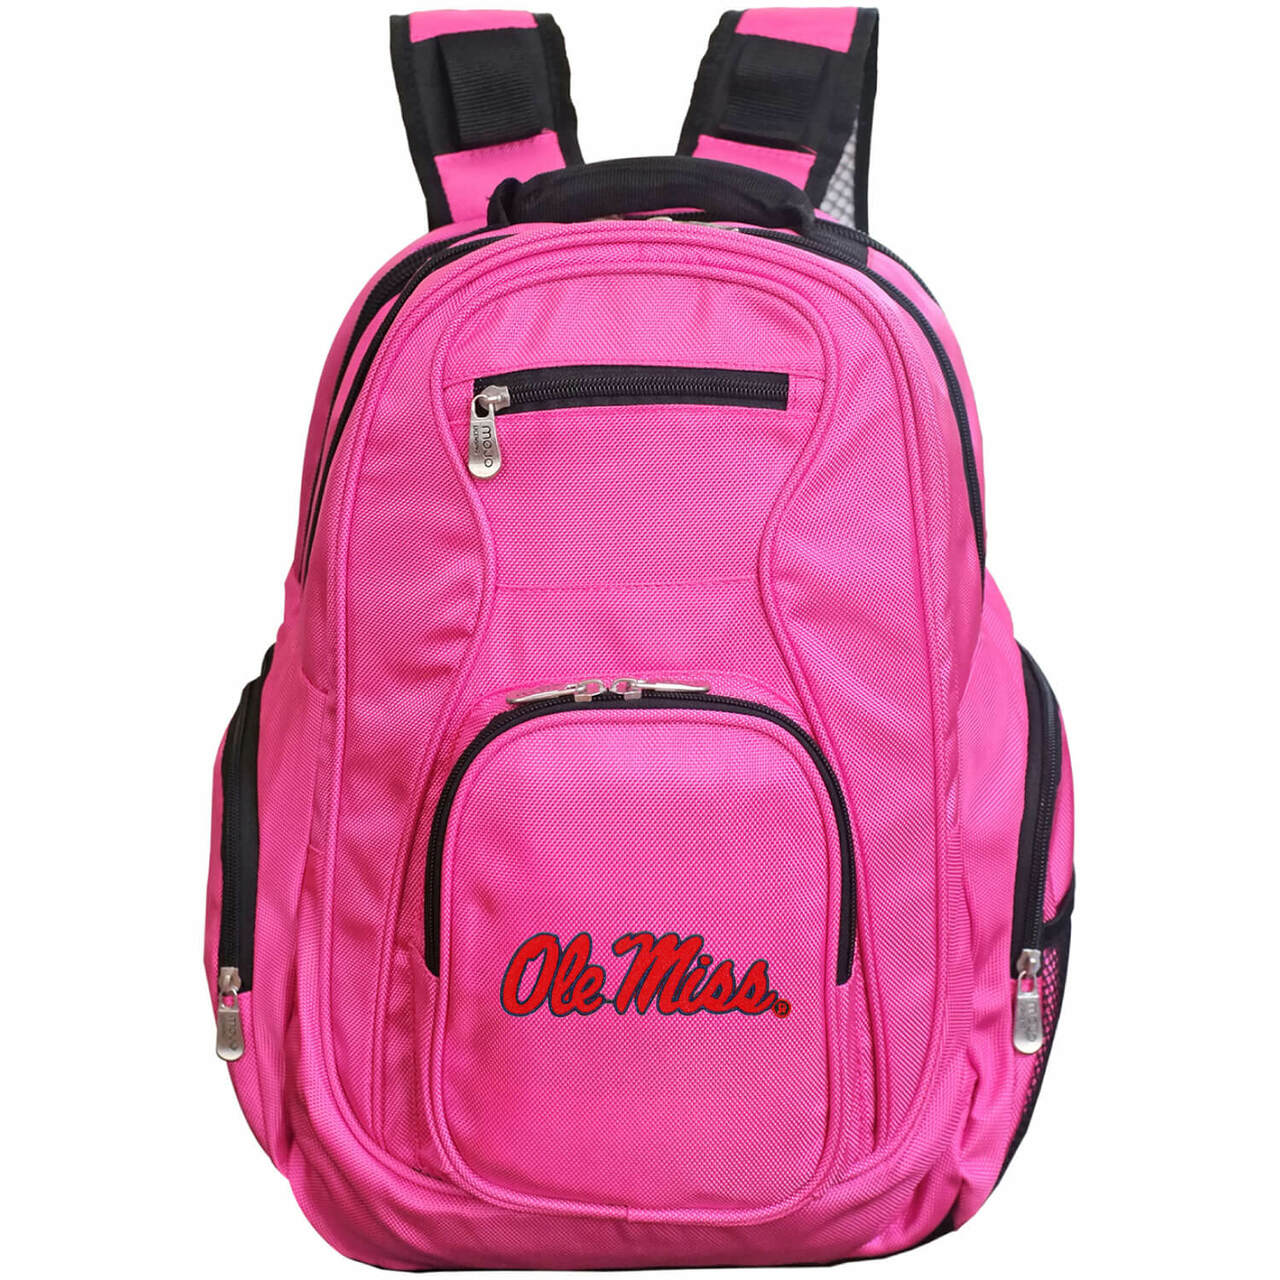 Miss Rebels Laptop Backpack Pink